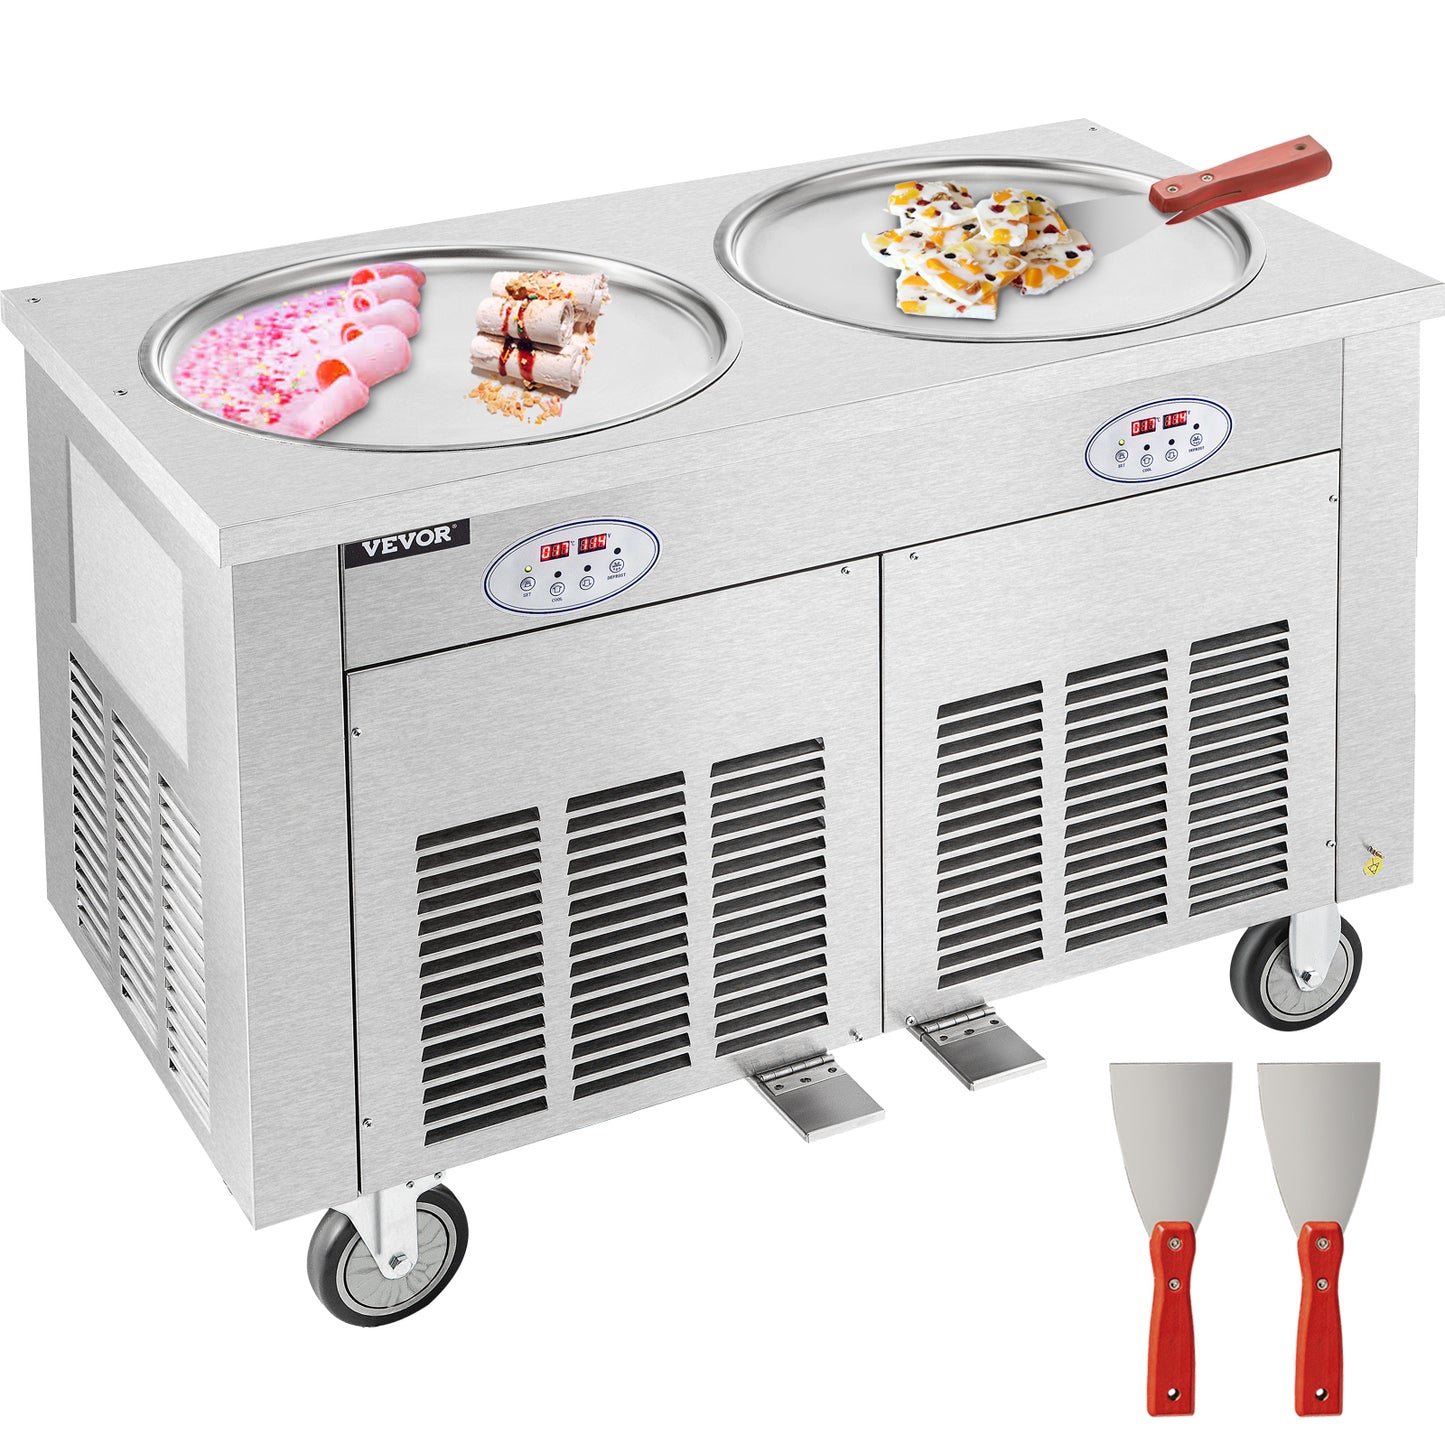 VEVOR 280W Commercial Fried Ice Cream Roll Machine 24 x 28 cm Single Square Pan Stainless Steel Home Ice Cream Porridge Maker